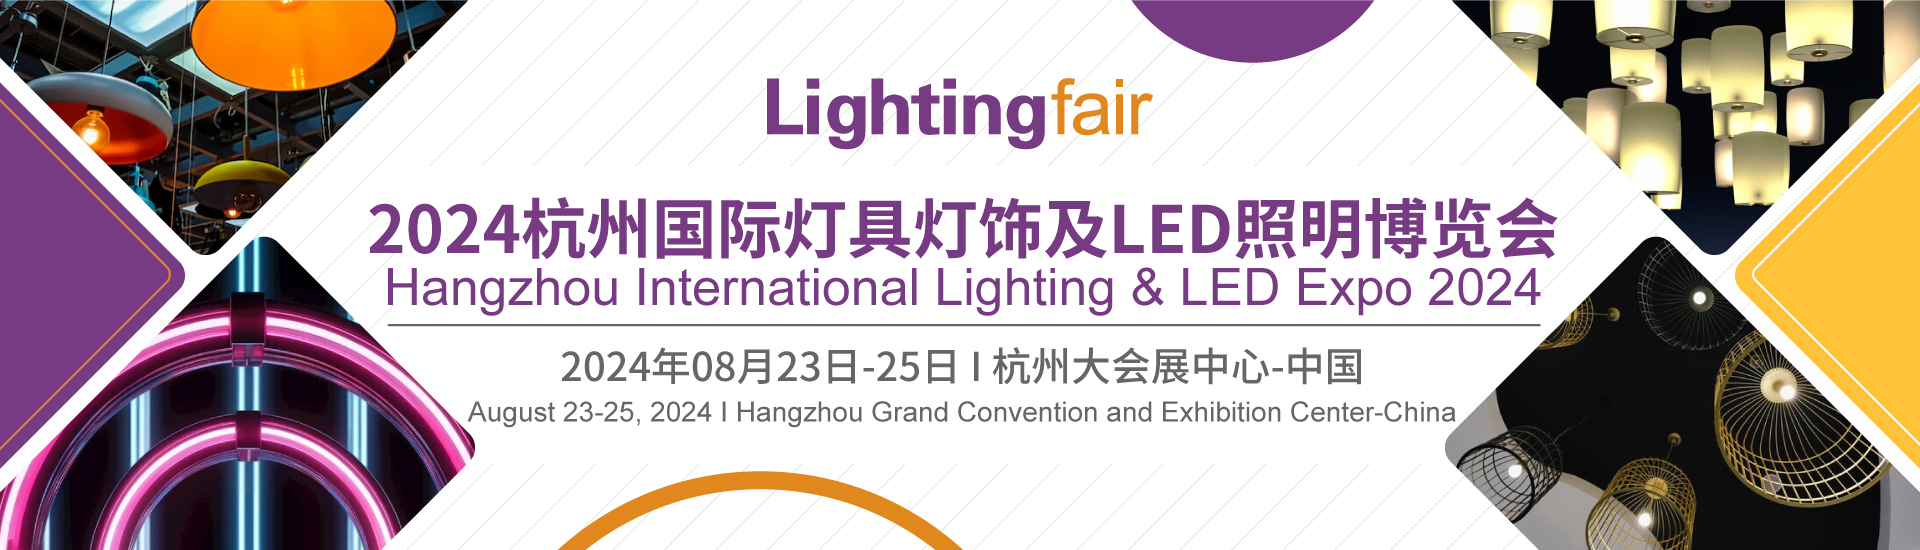 Hangzhou International Lighting & LED Expo 2024